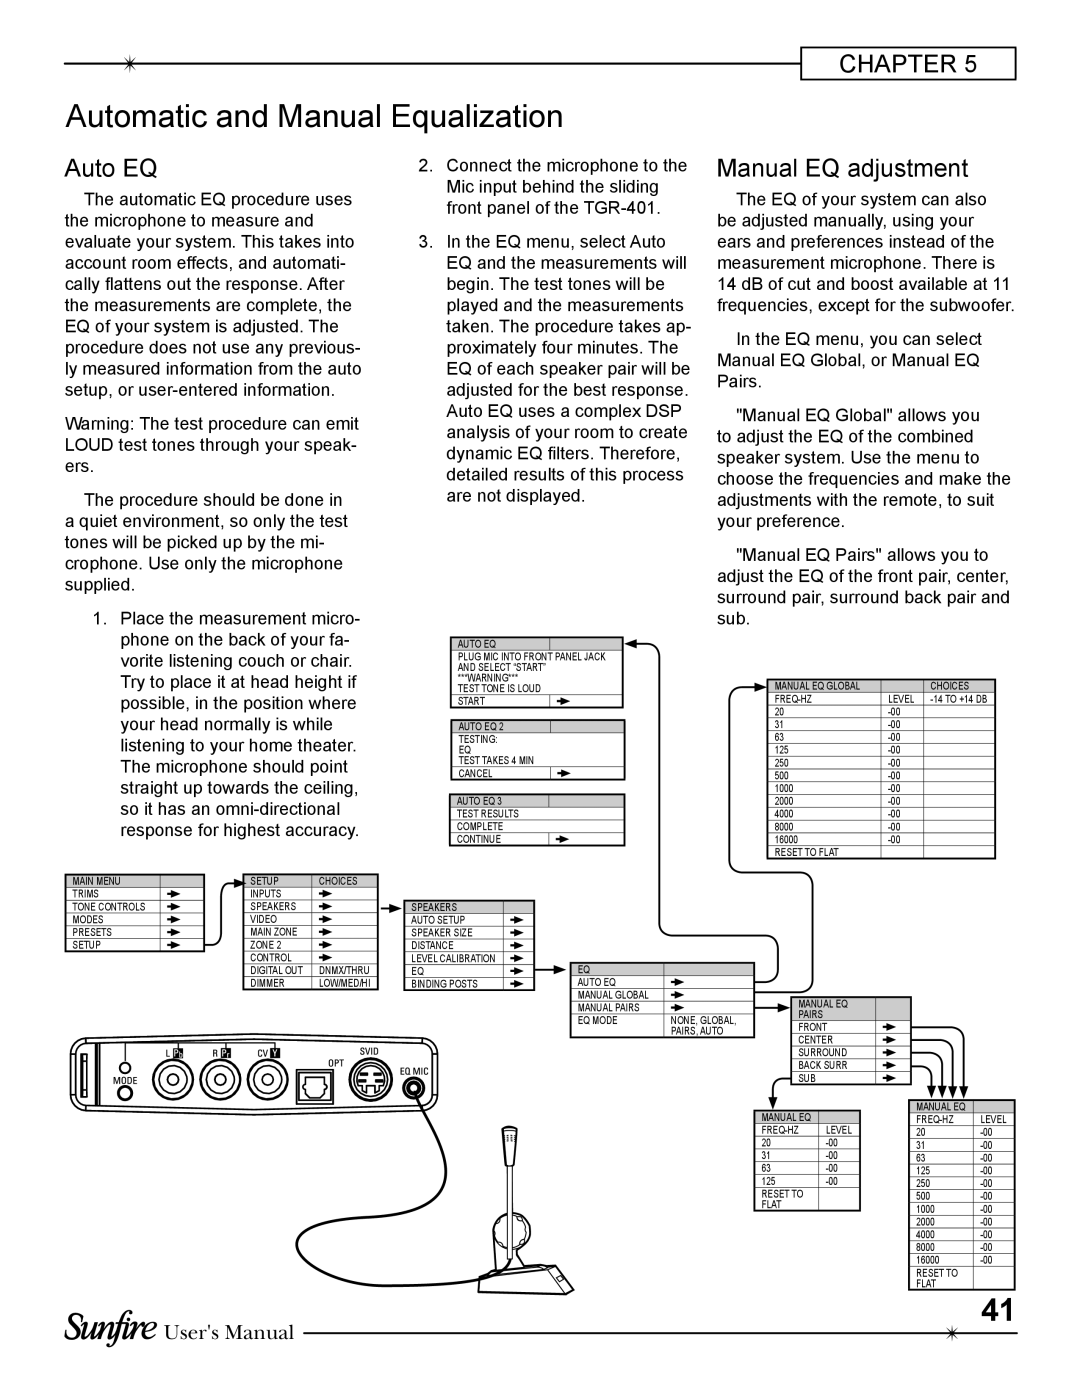 Sunfire TGR-401-230 manual Automatic and Manual Equalization, Chapter, Auto EQ, Manual EQ adjustment, Users Manual 